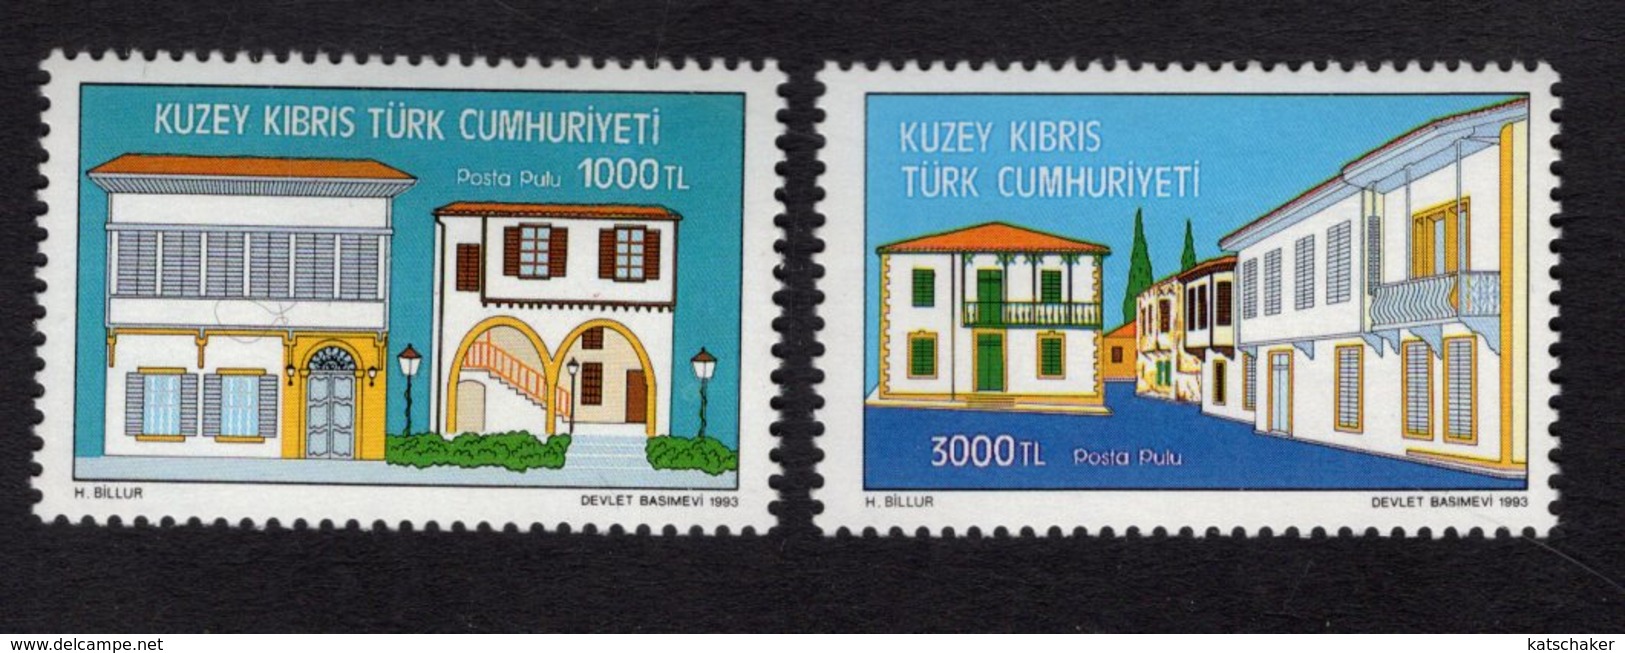 672695914 TURKISH CYPRUS 1993 POSTFRIS MINT NEVER HINGED POSTFRISCH EINWANDFREI SCOTT 350 351 REHABILITATION PROJECT - Unused Stamps